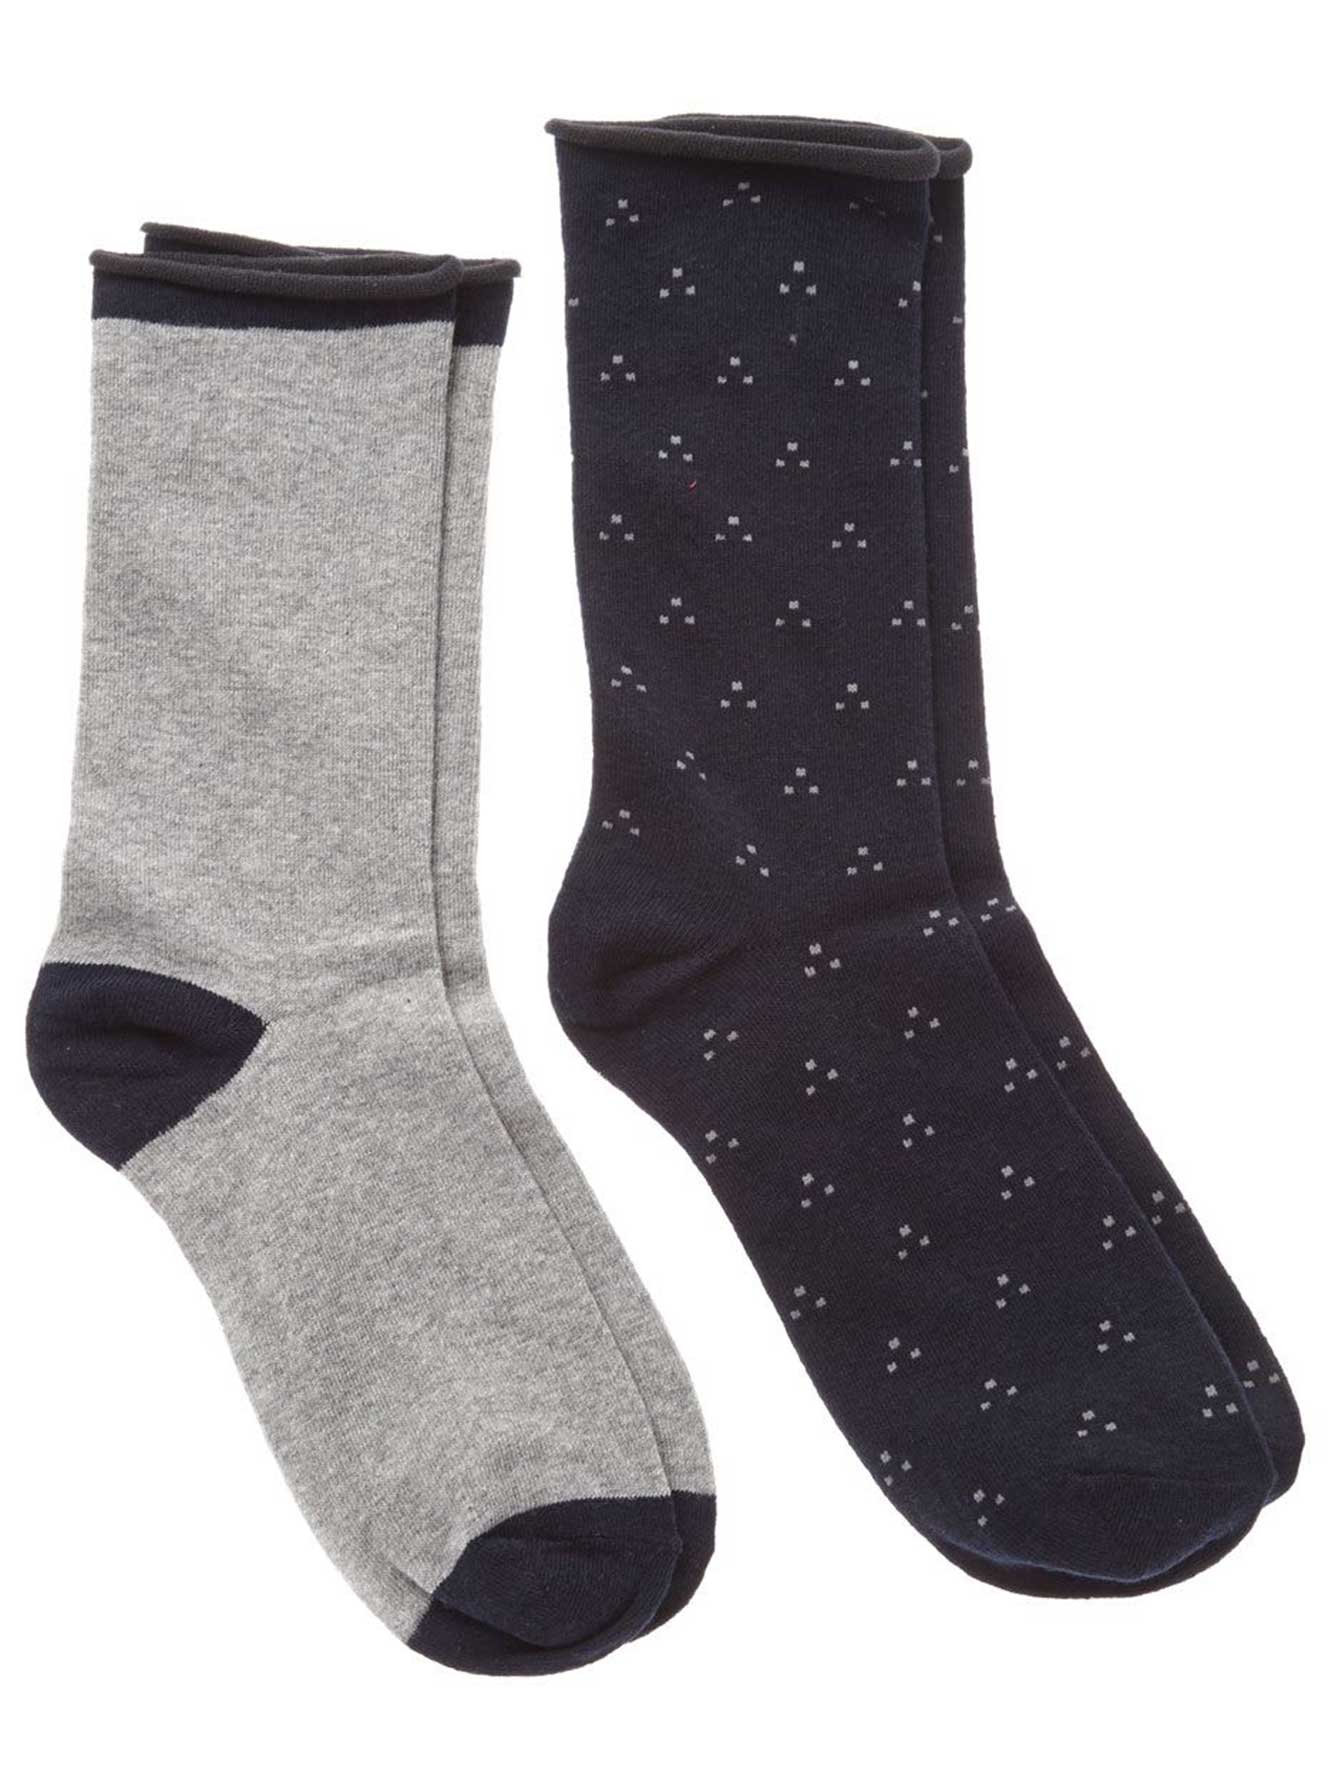 2 Pairs of Roll Up Socks | Penningtons